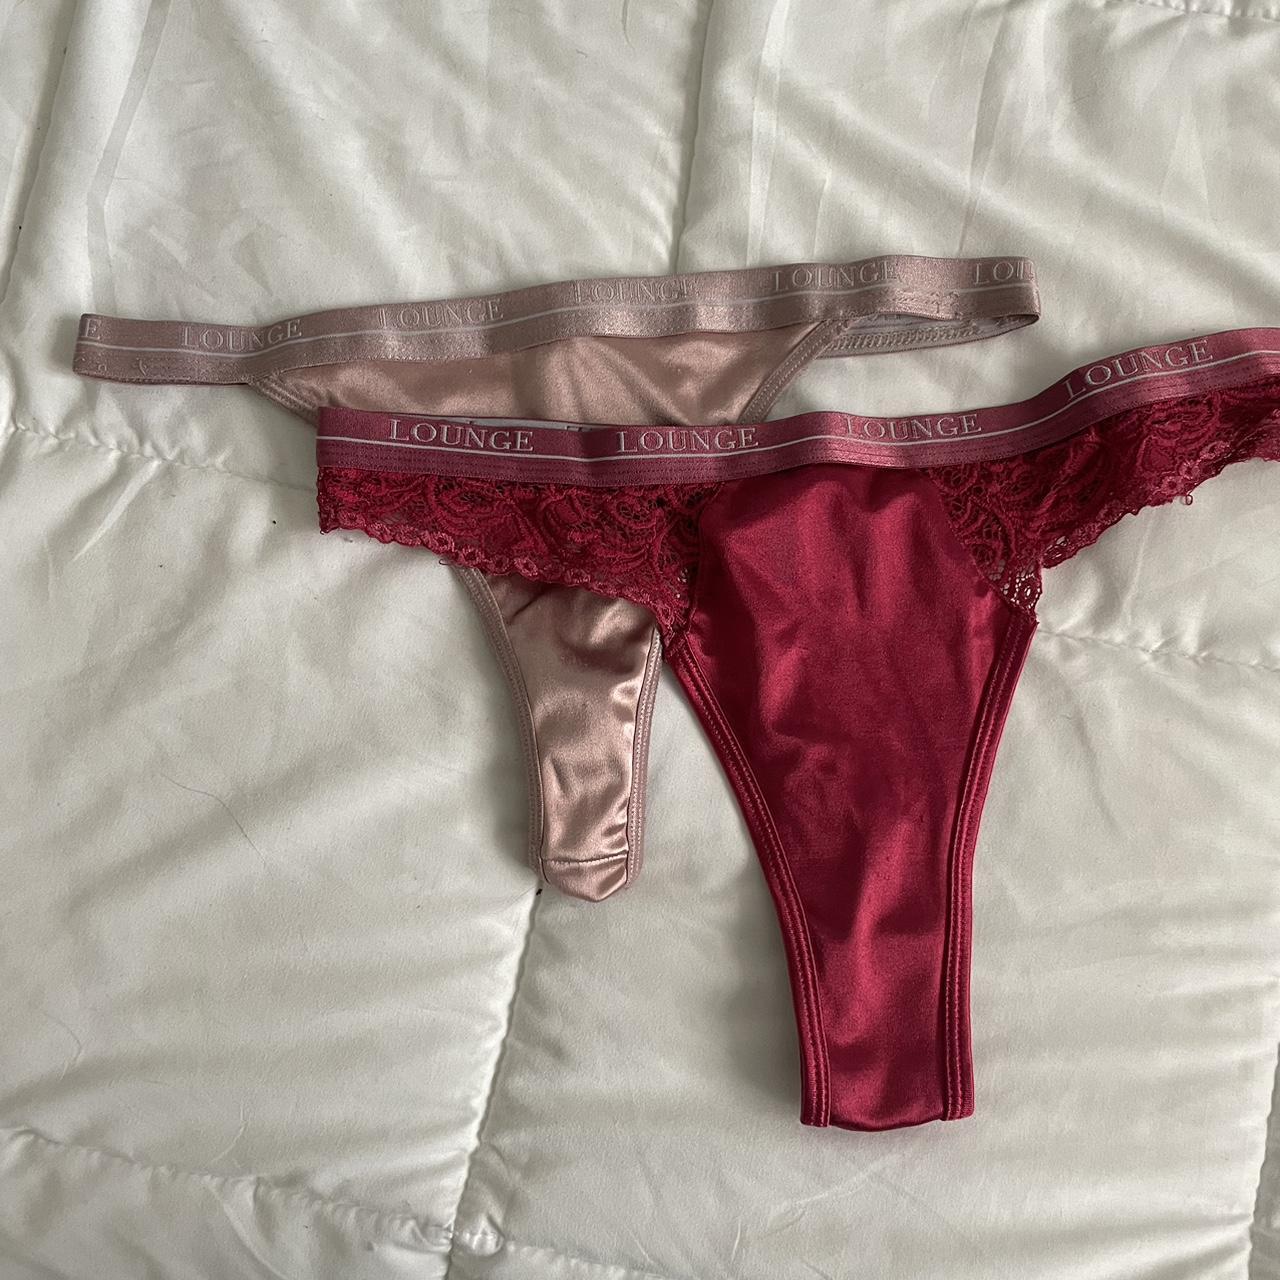 Used/worn panties ;) for Sale in Houston, TX - OfferUp